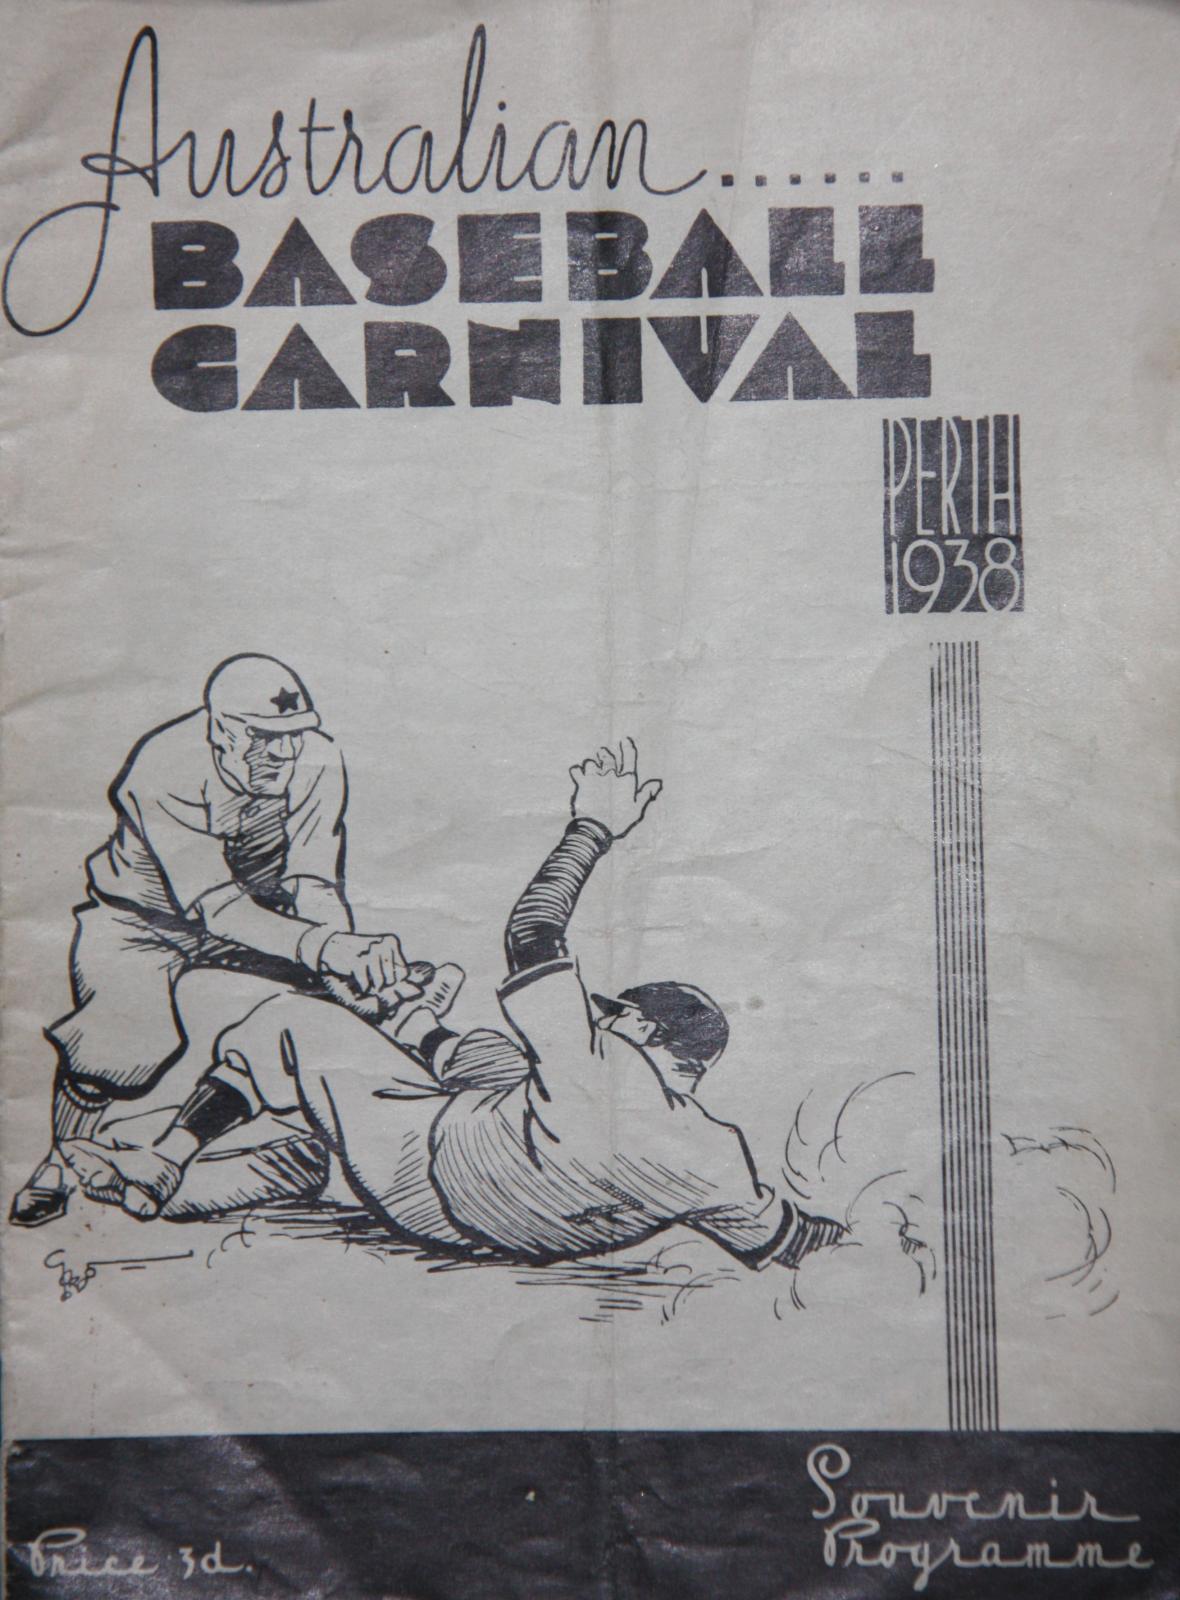 1938 Australian Baseball Carnival Souvenir Programme - Front